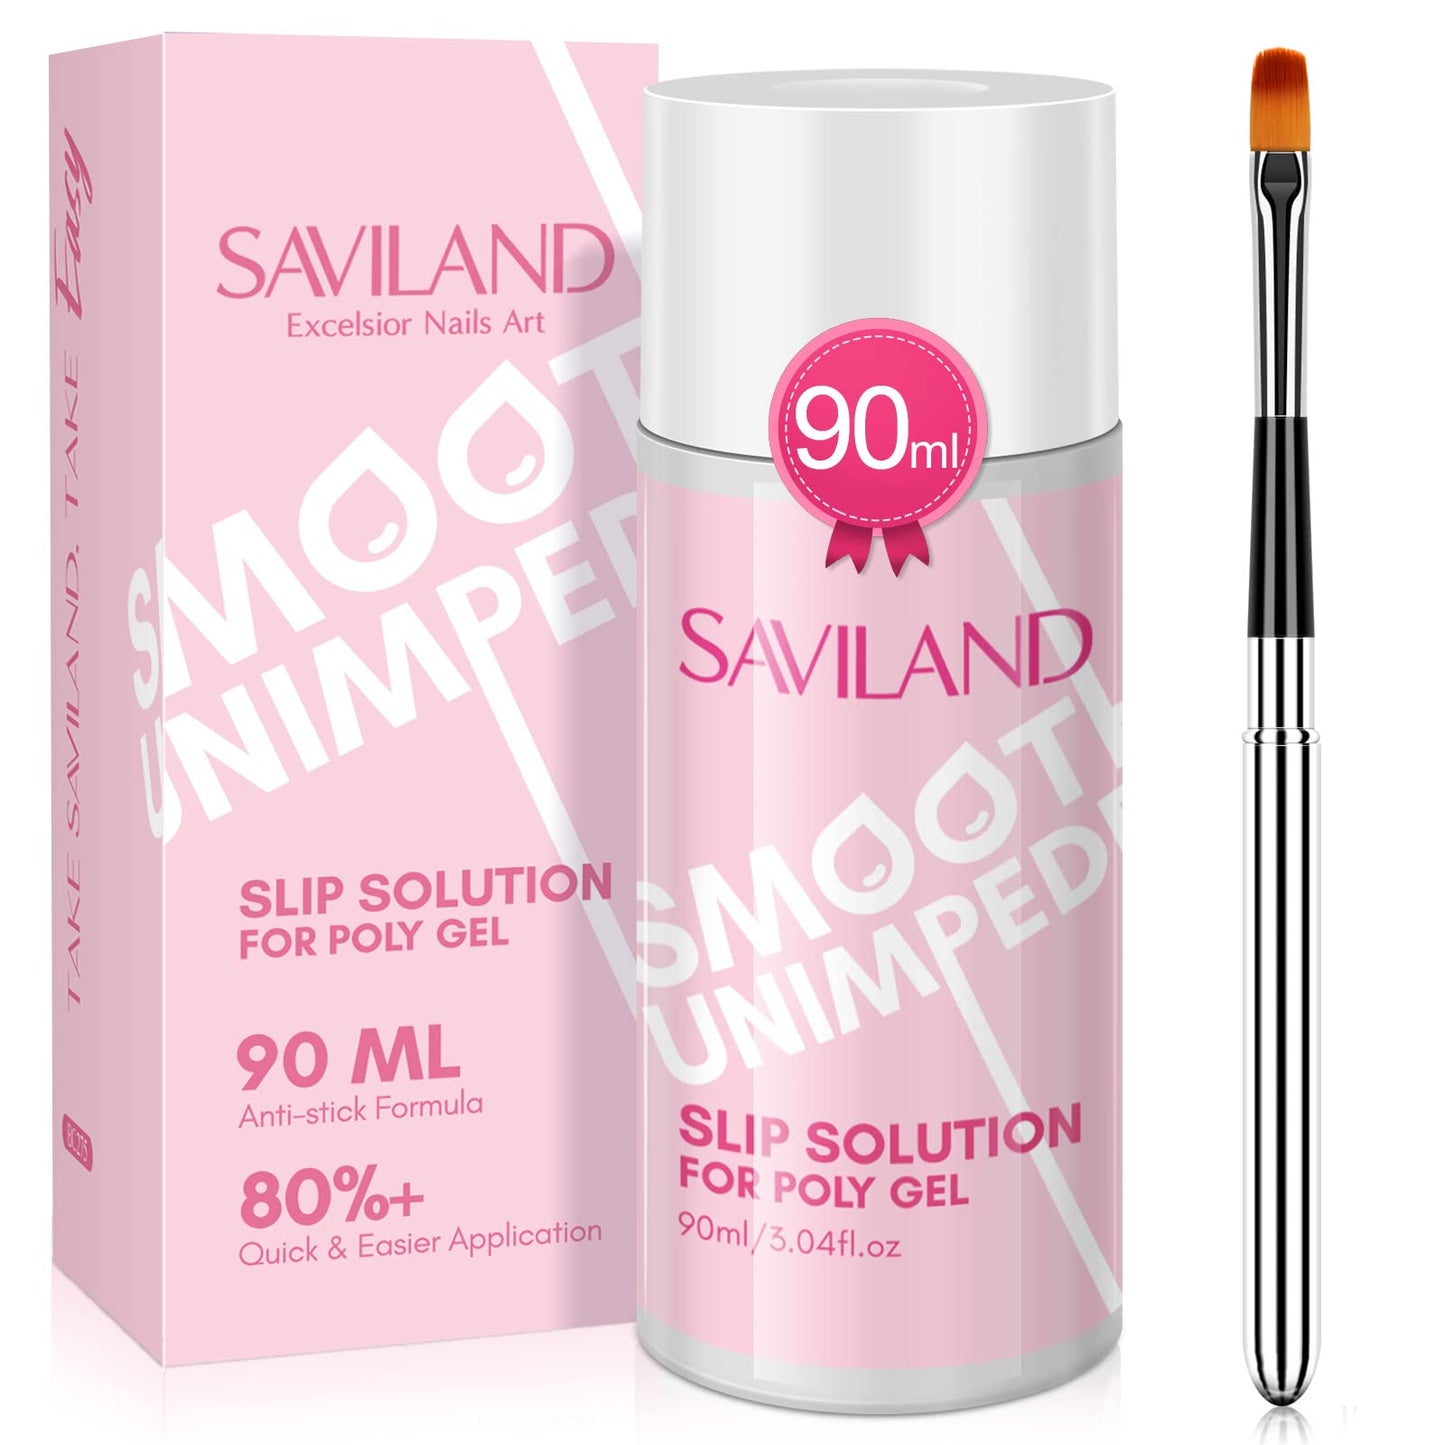 Saviland Slip Solution Nail Kit - 90ml Poly Nail Gel Nail Extension Clear Slip Solution Anti-stick Tools with Nail Art Brush Kit for Poly Extension Nails Shaping